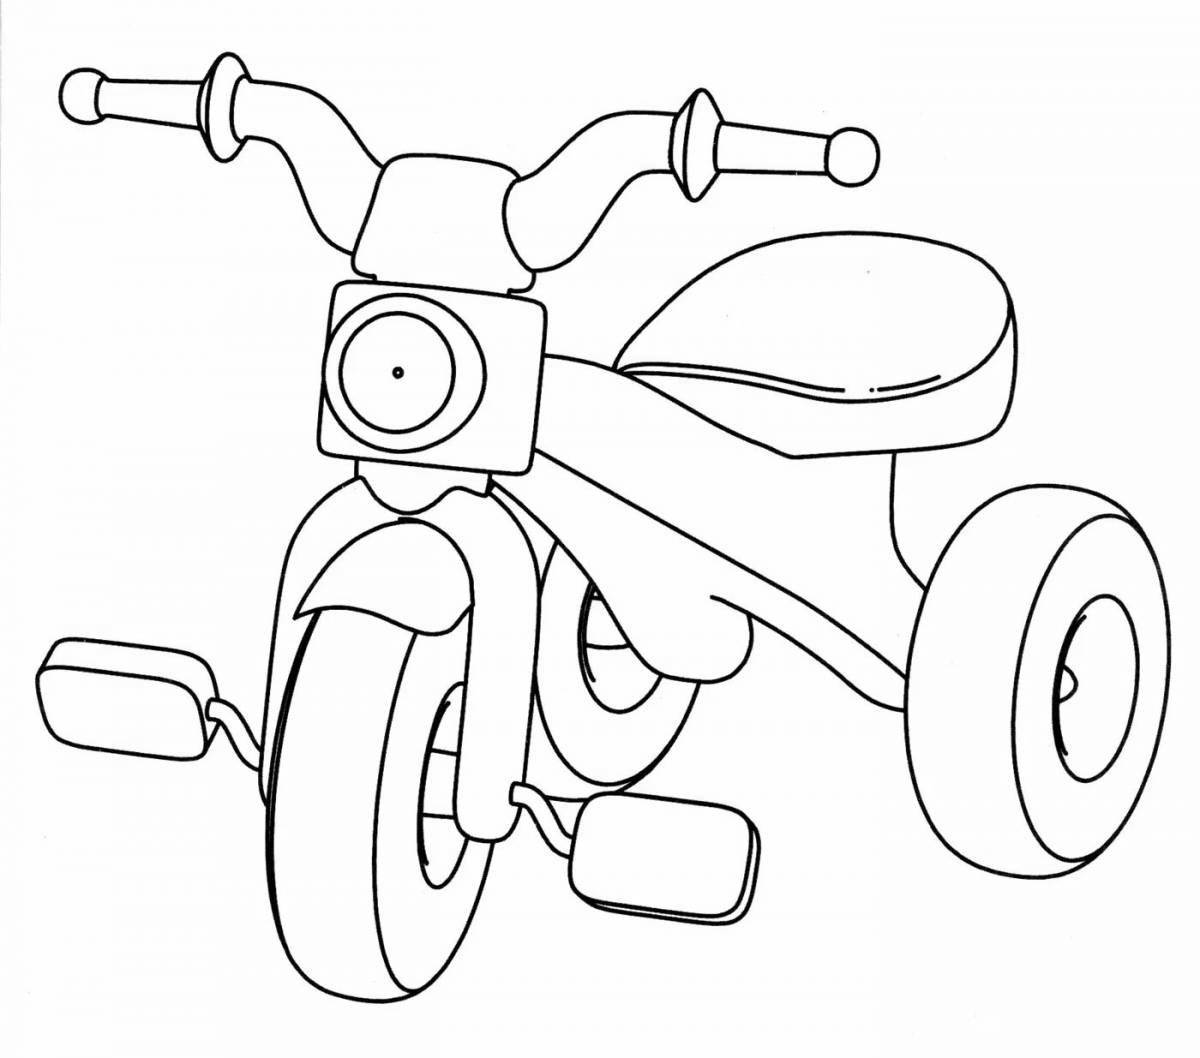 Children's quad bike coloring book